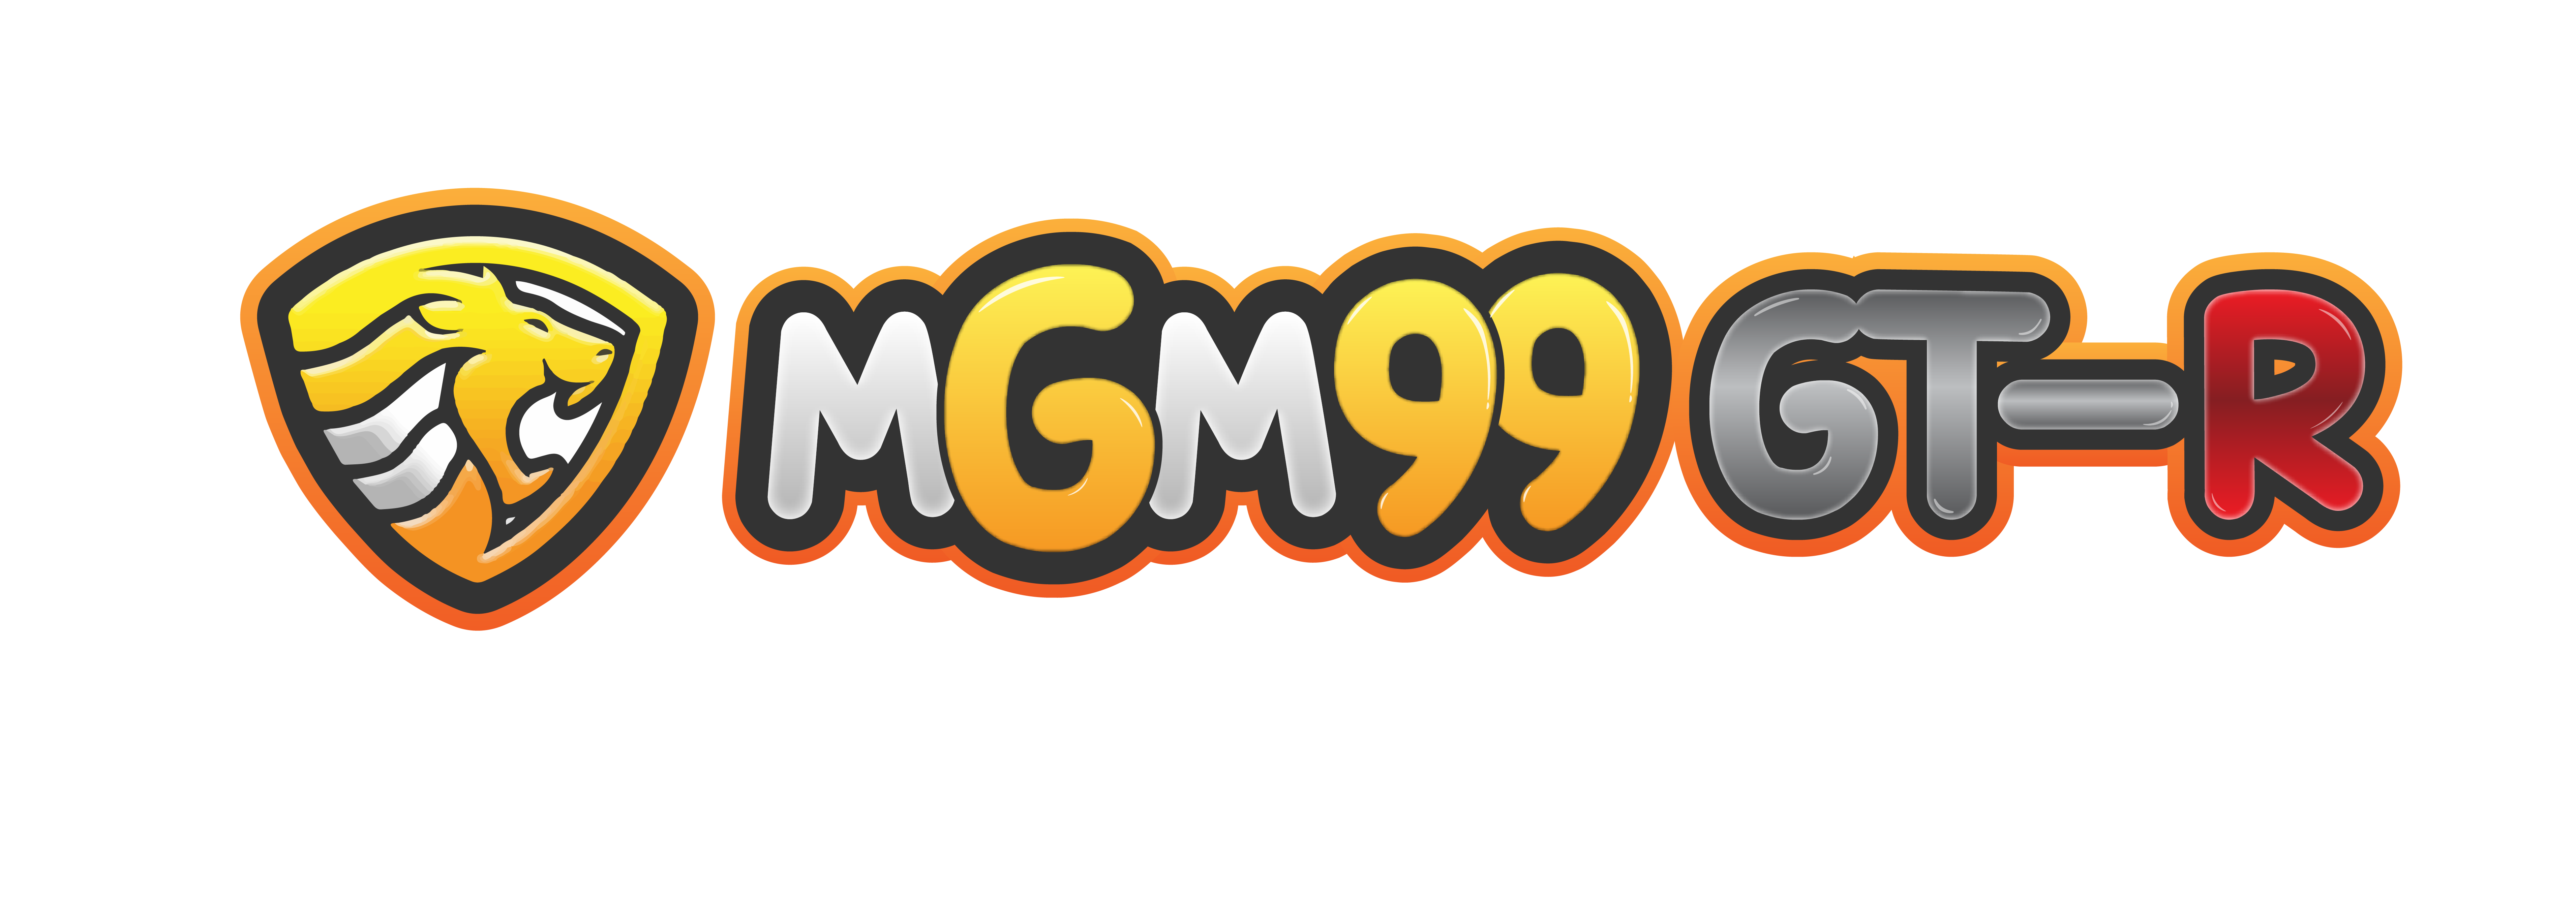 MGM99GTR